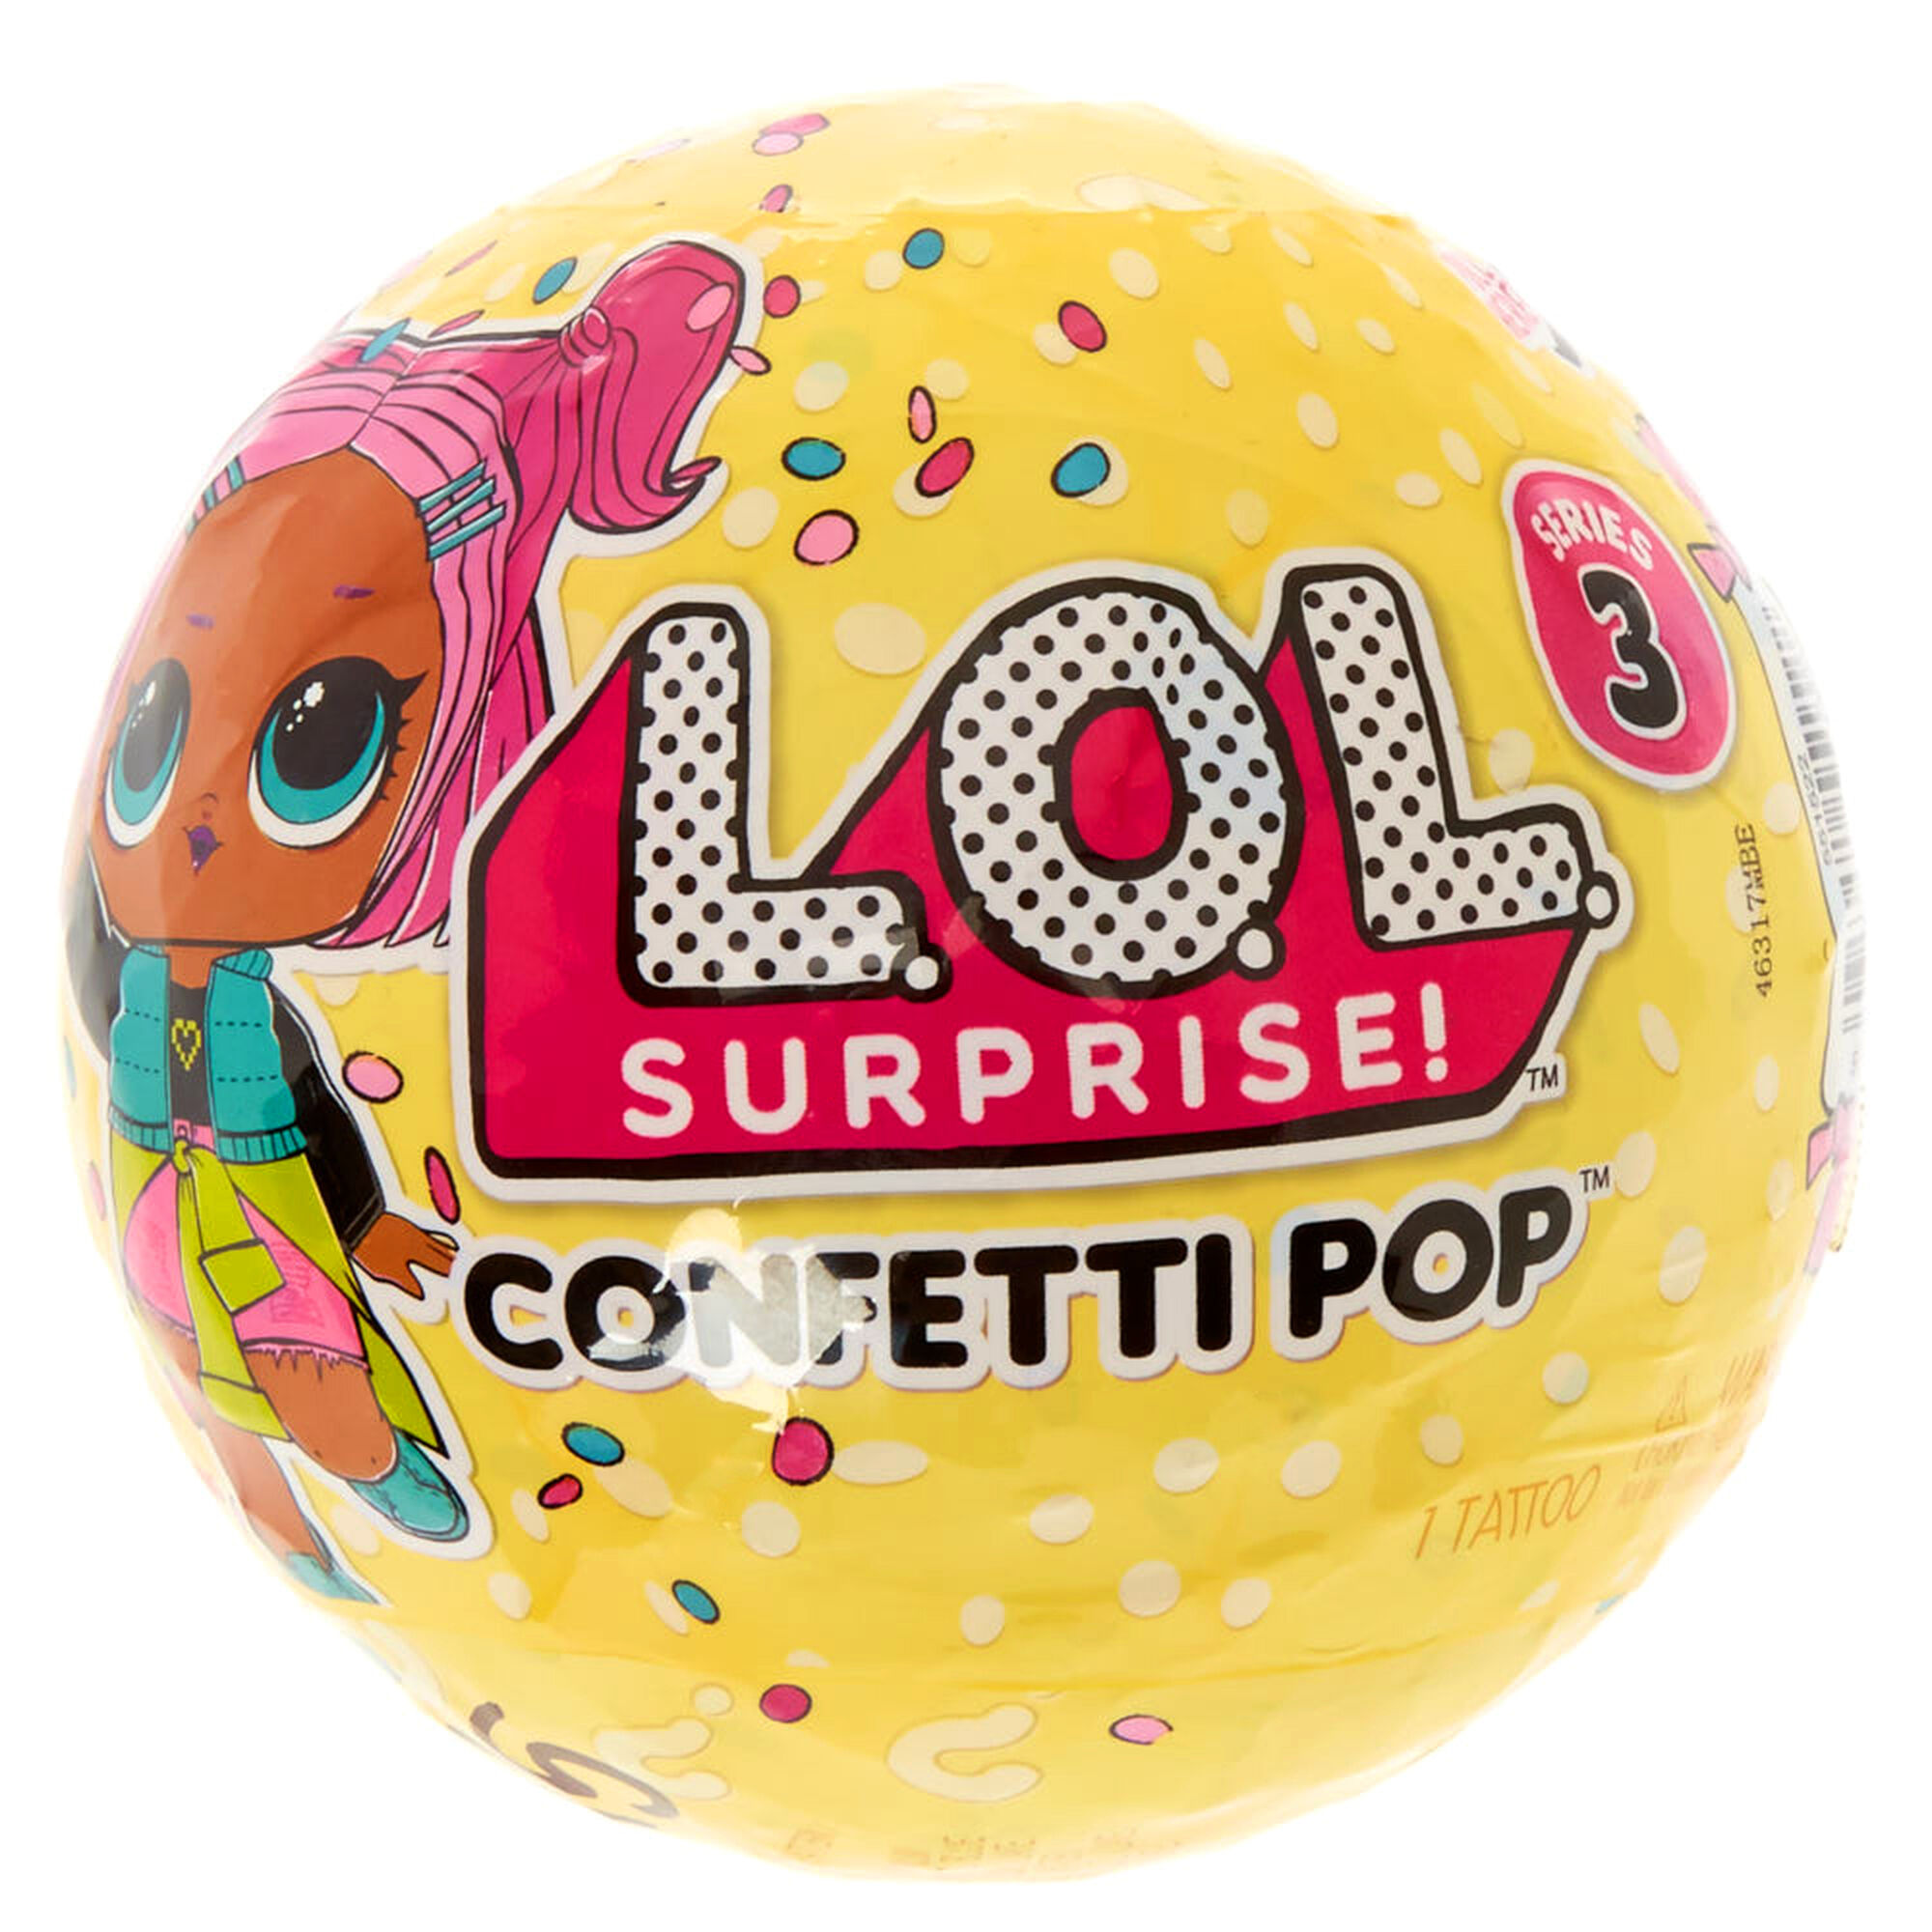  L O L Surprise Confetti Pop  Tots Doll Claire s